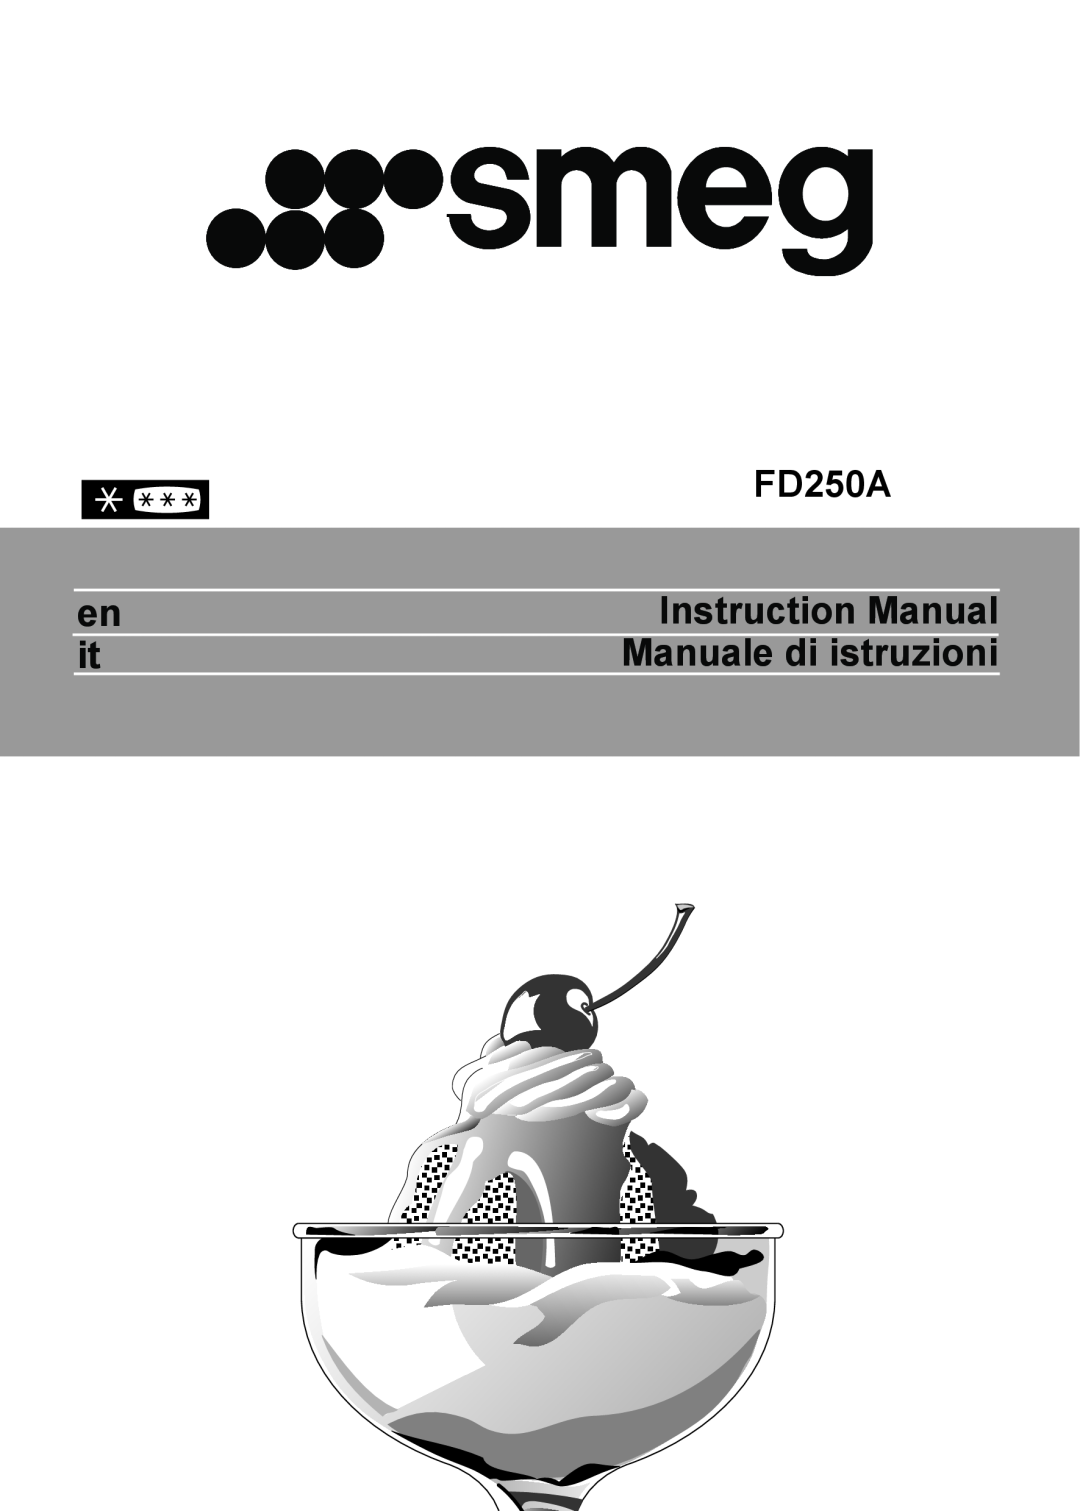 Smeg FD250A instruction manual Manuale di istruzioni 